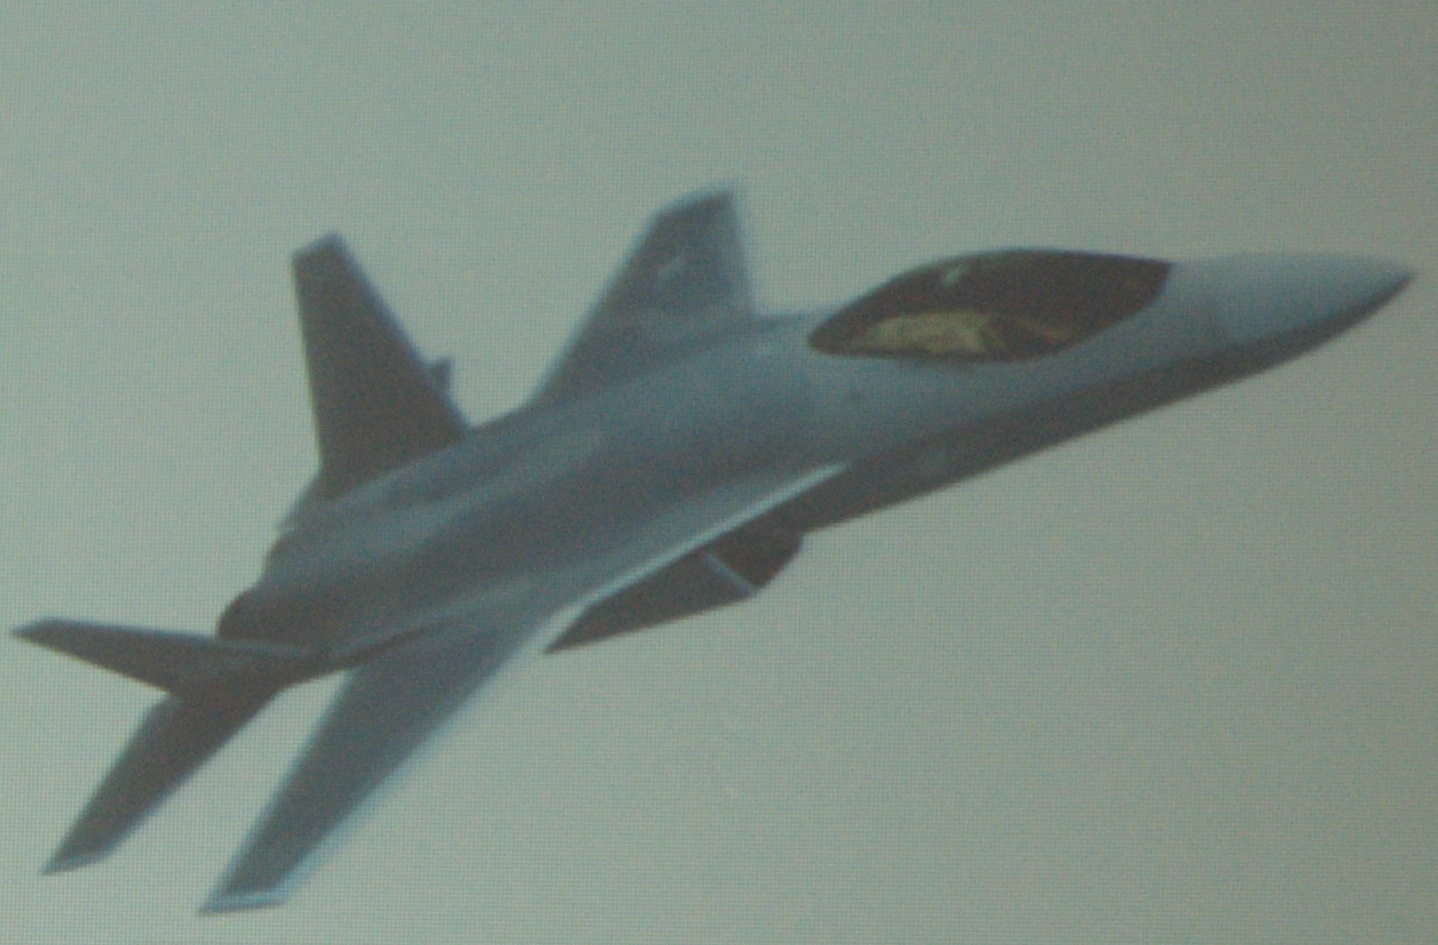 mil-avia-if-x-jet-defence.pk-angle-view.jpg